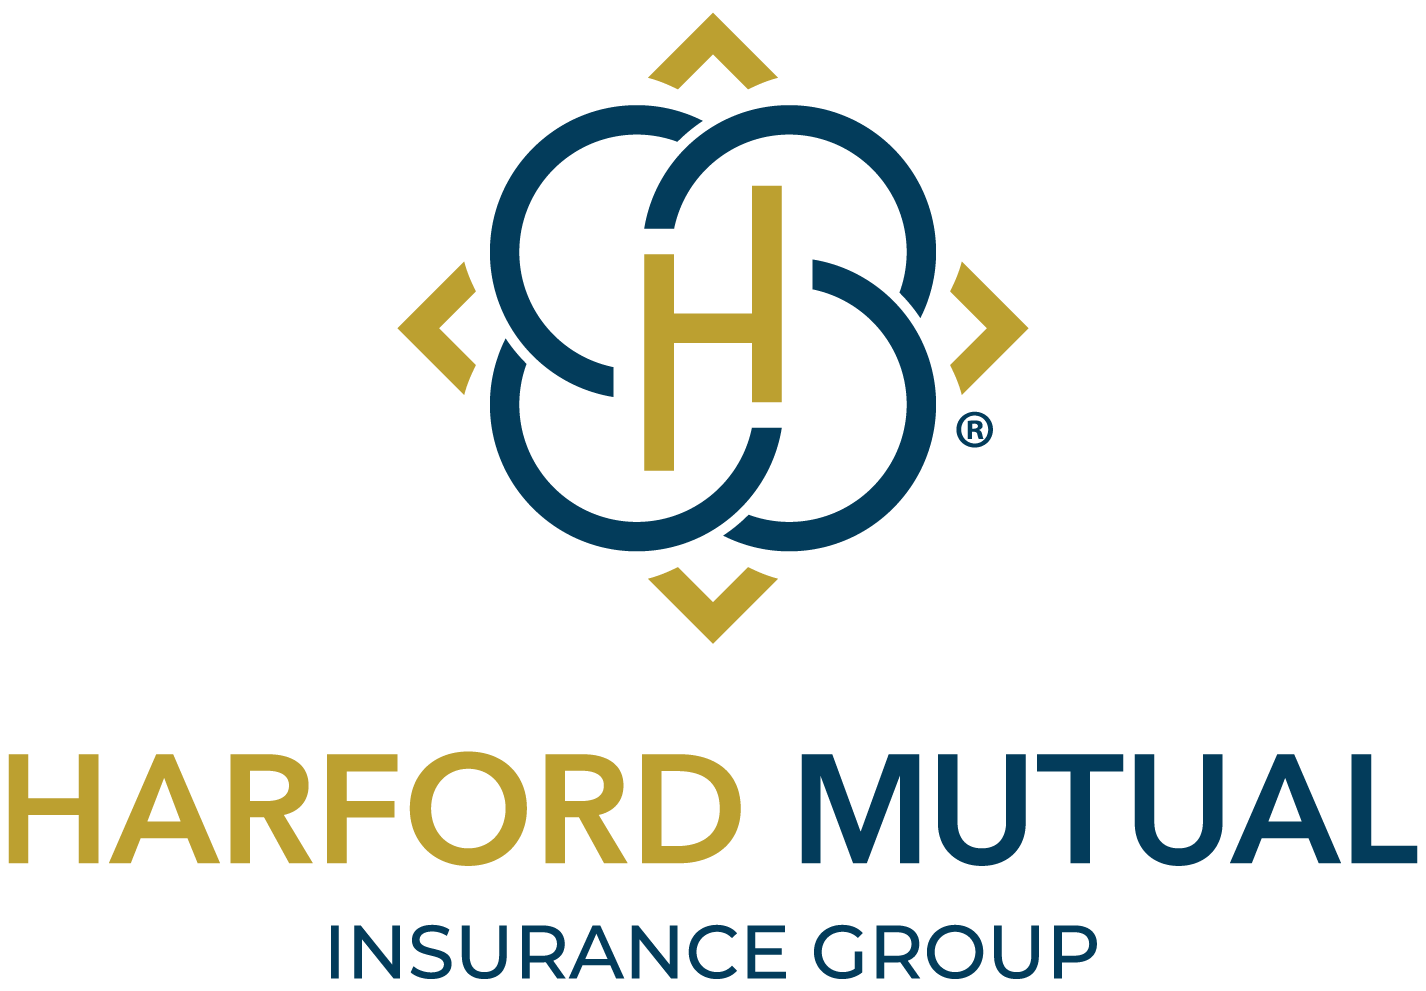 Harford Mutual Insurance Company